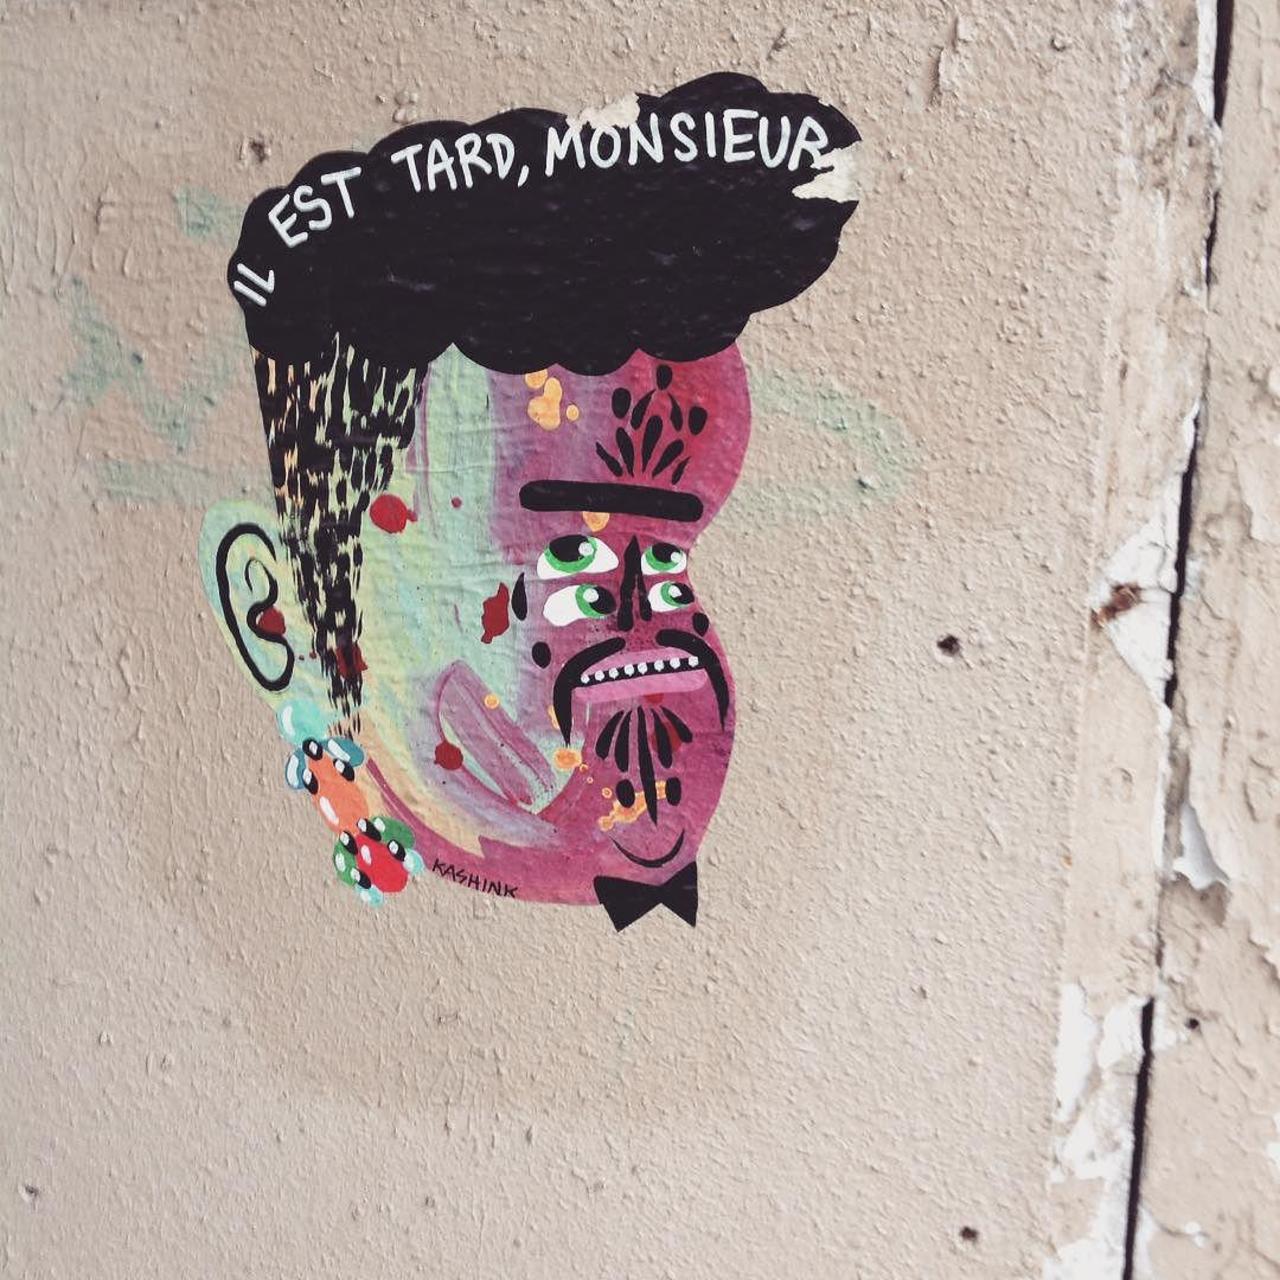 #Paris #graffiti photo by @stefetlinda http://ift.tt/1KiOp2m #StreetArt https://t.co/JYd4R9Ag9t